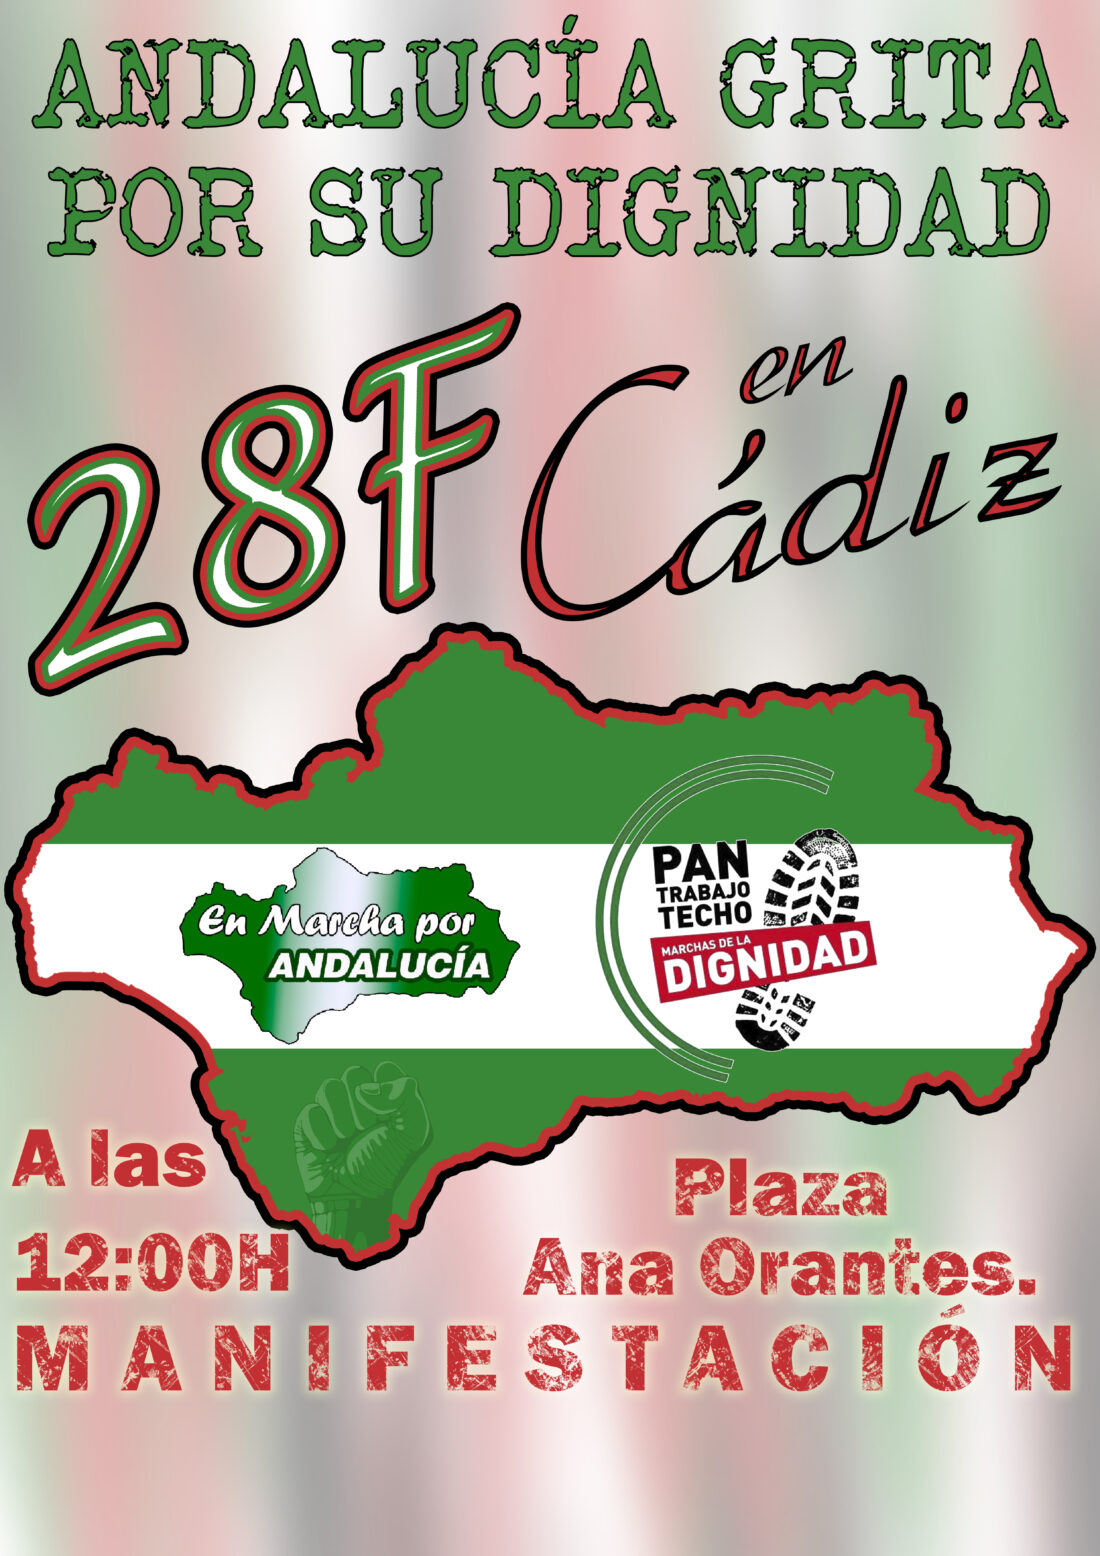 28F: Manifestación en Cádiz